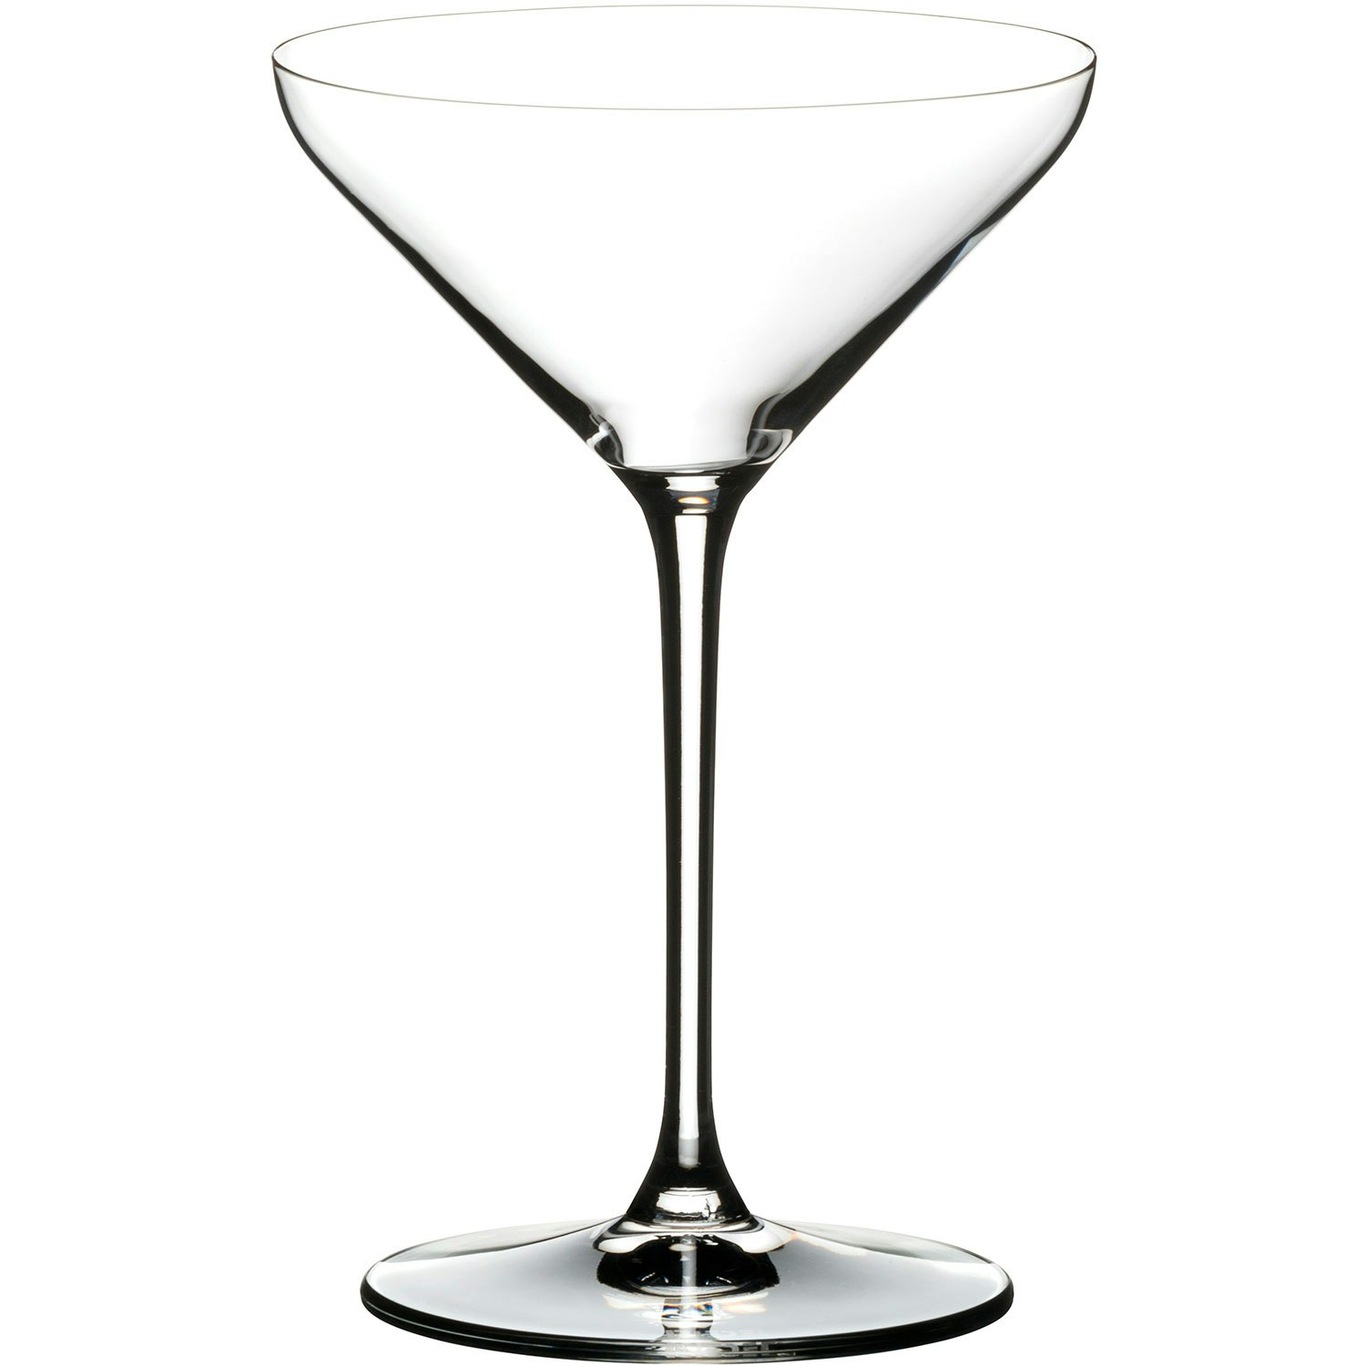 https://royaldesign.com/image/11/riedel-martini-glass-25-cl-2-pack-0?w=800&quality=80